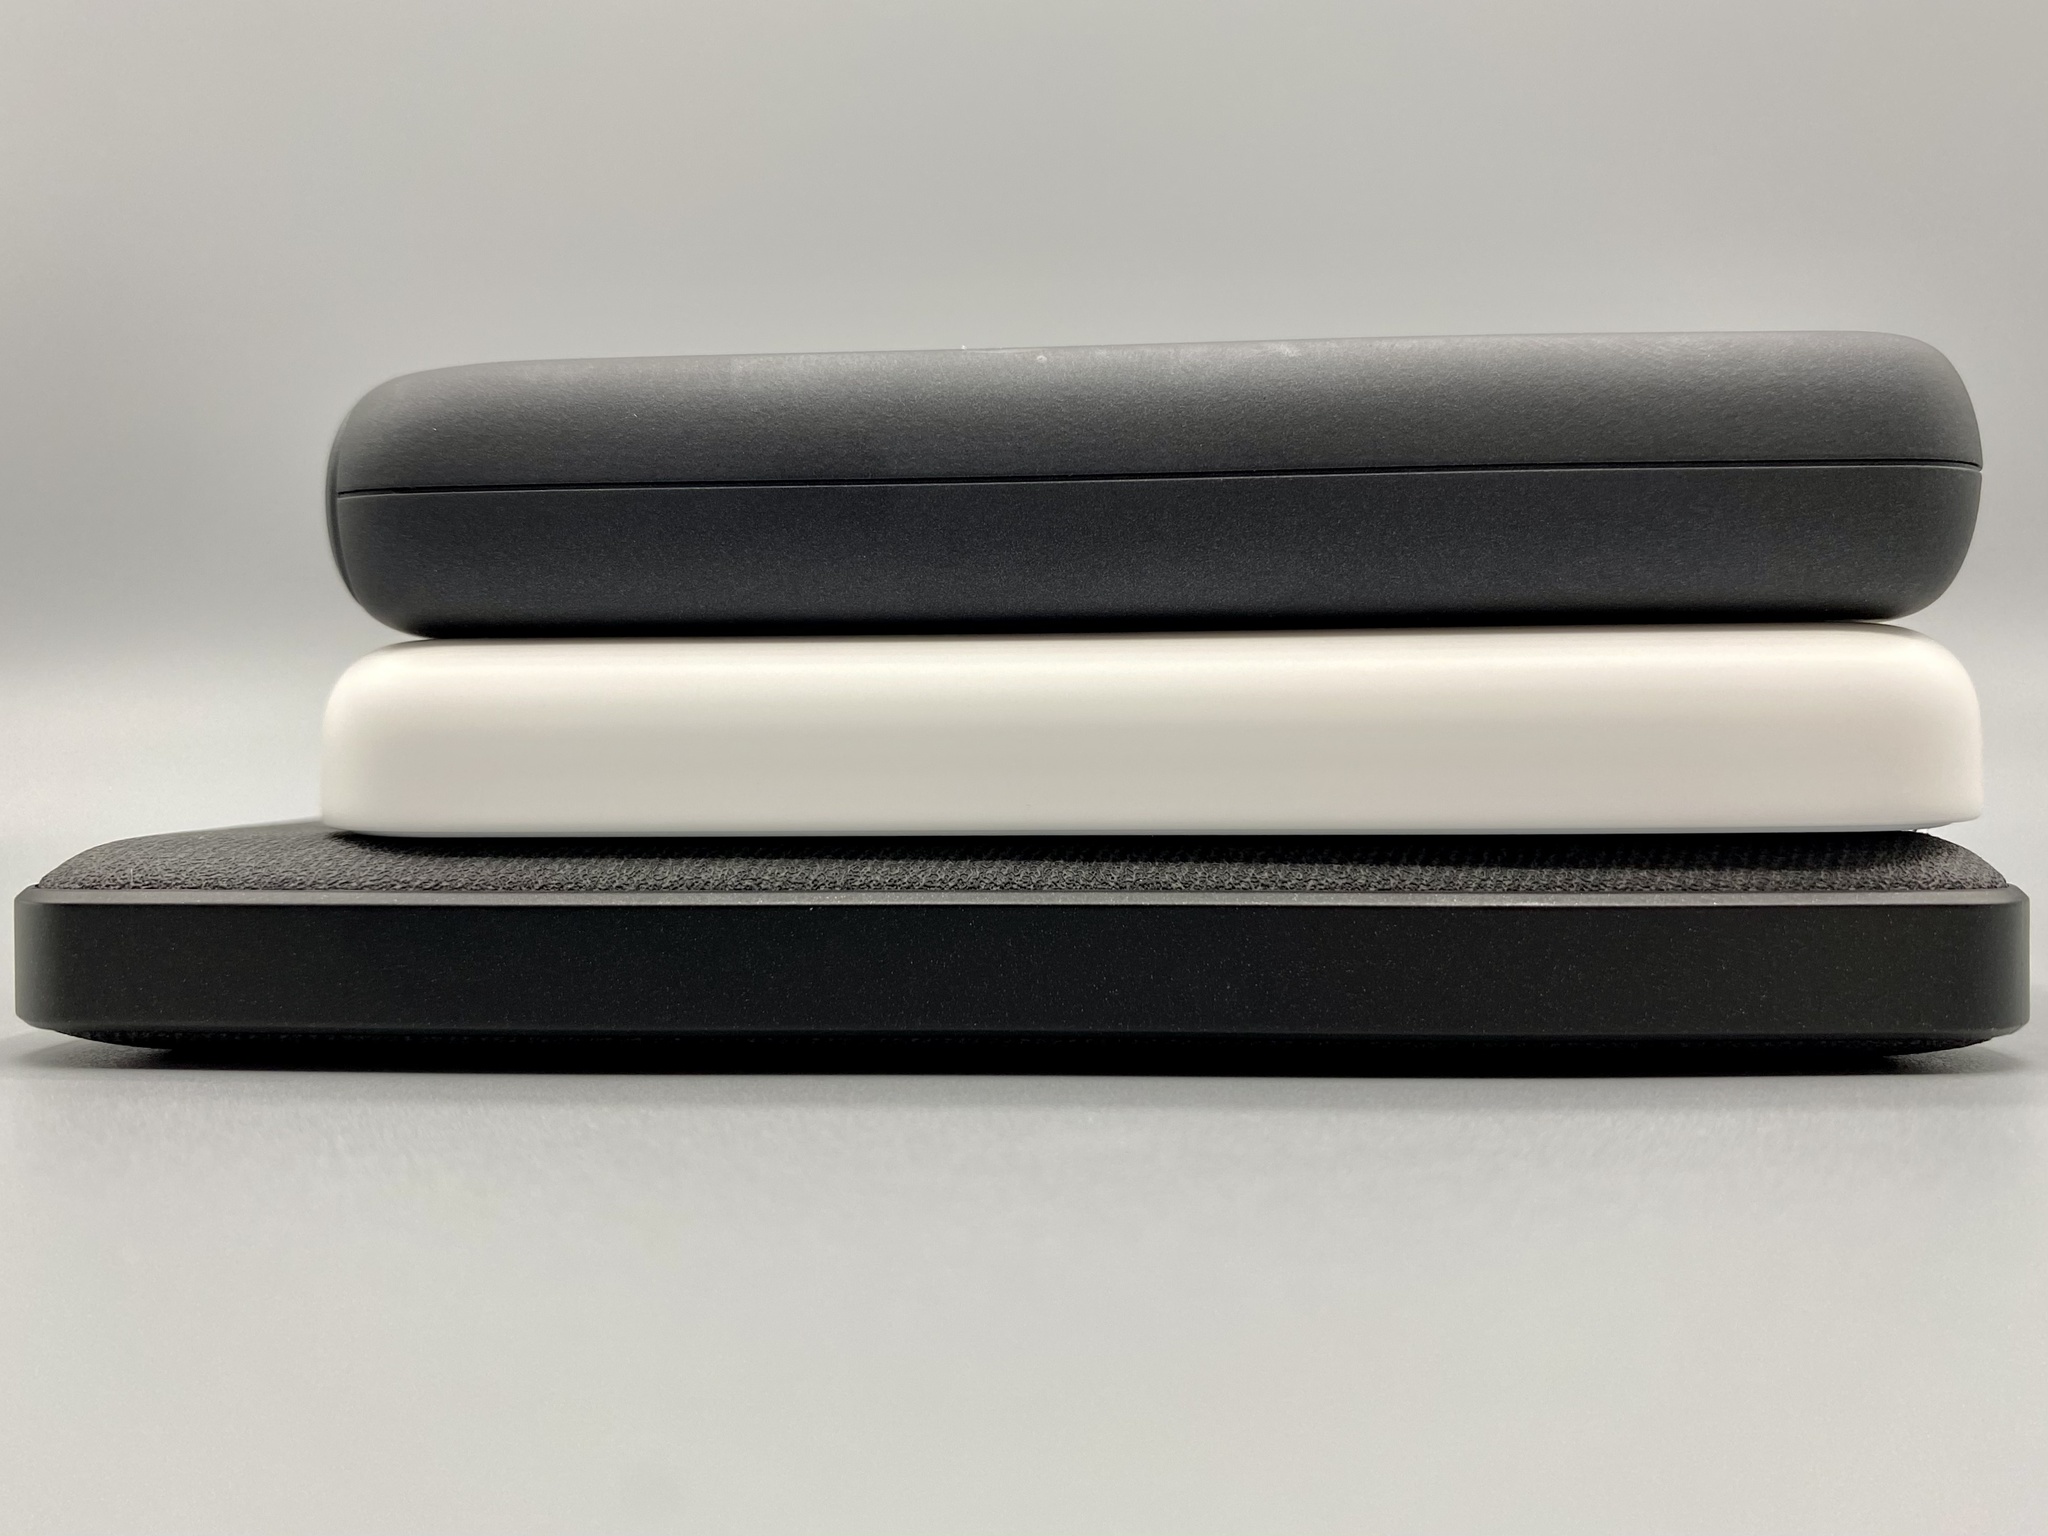 Apple Magsafe Battery Pack Mophie Anker Side Comparison